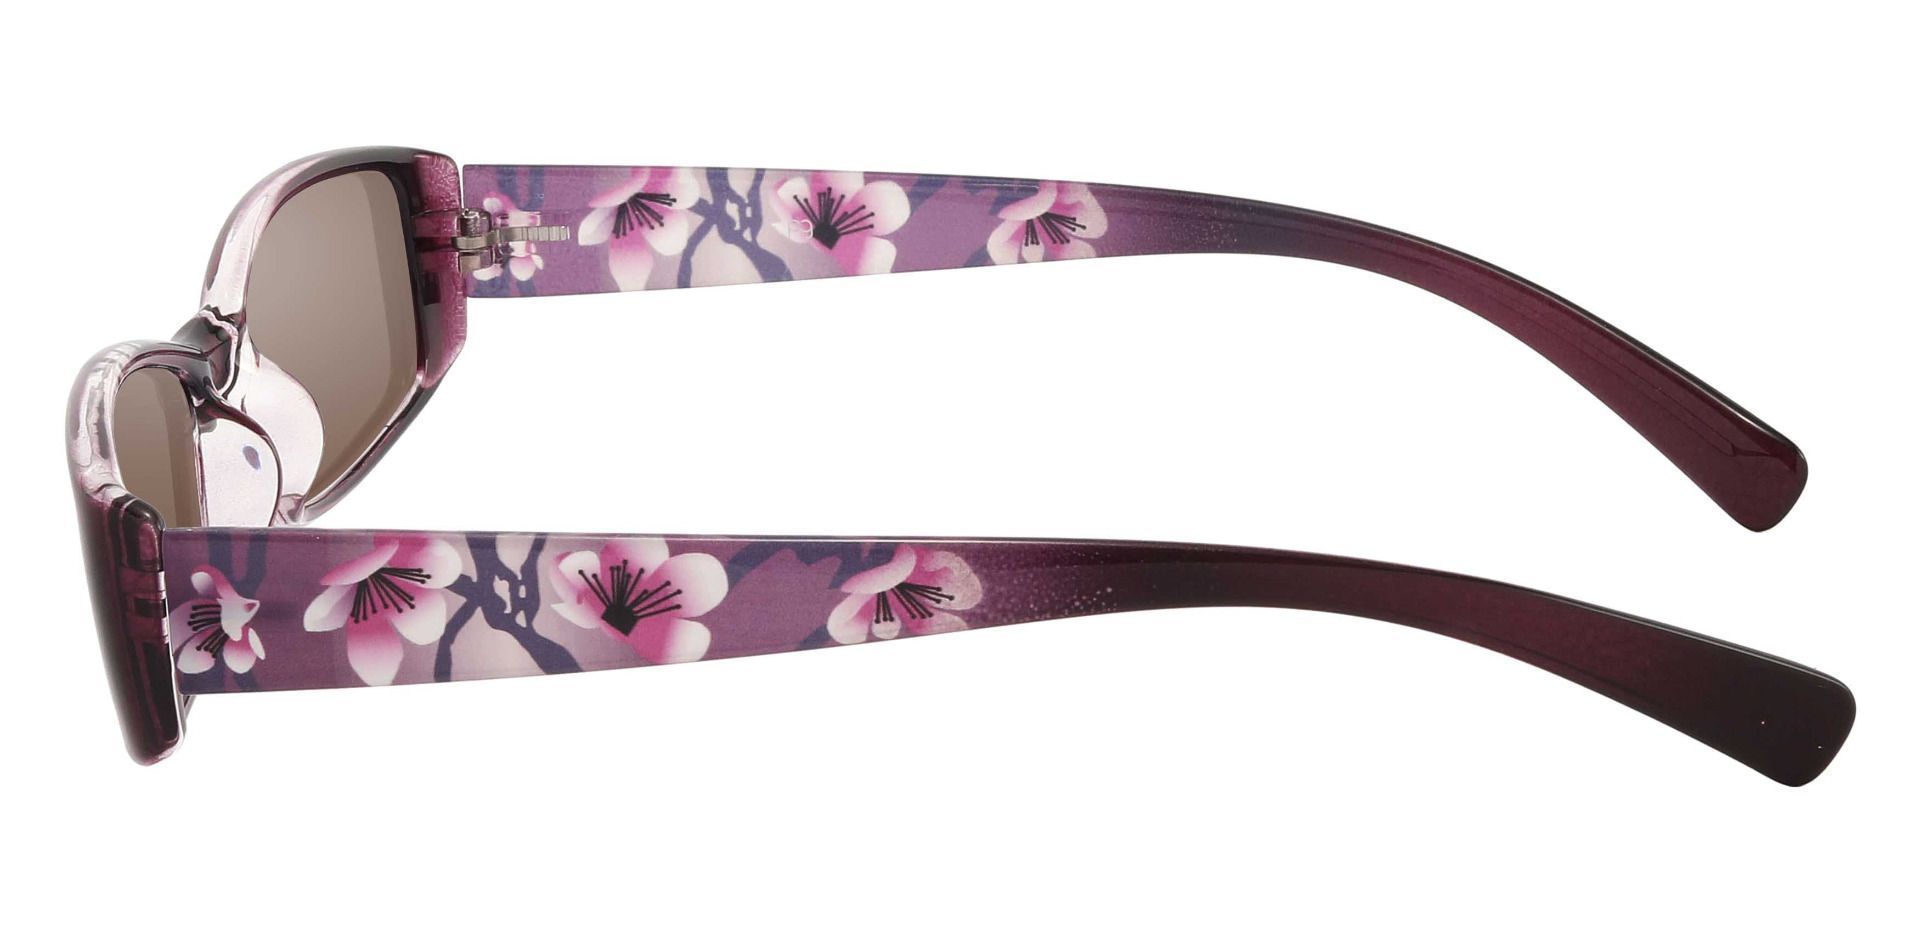 Medora Rectangle Single Vision Sunglasses - Purple Frame With Brown Lenses